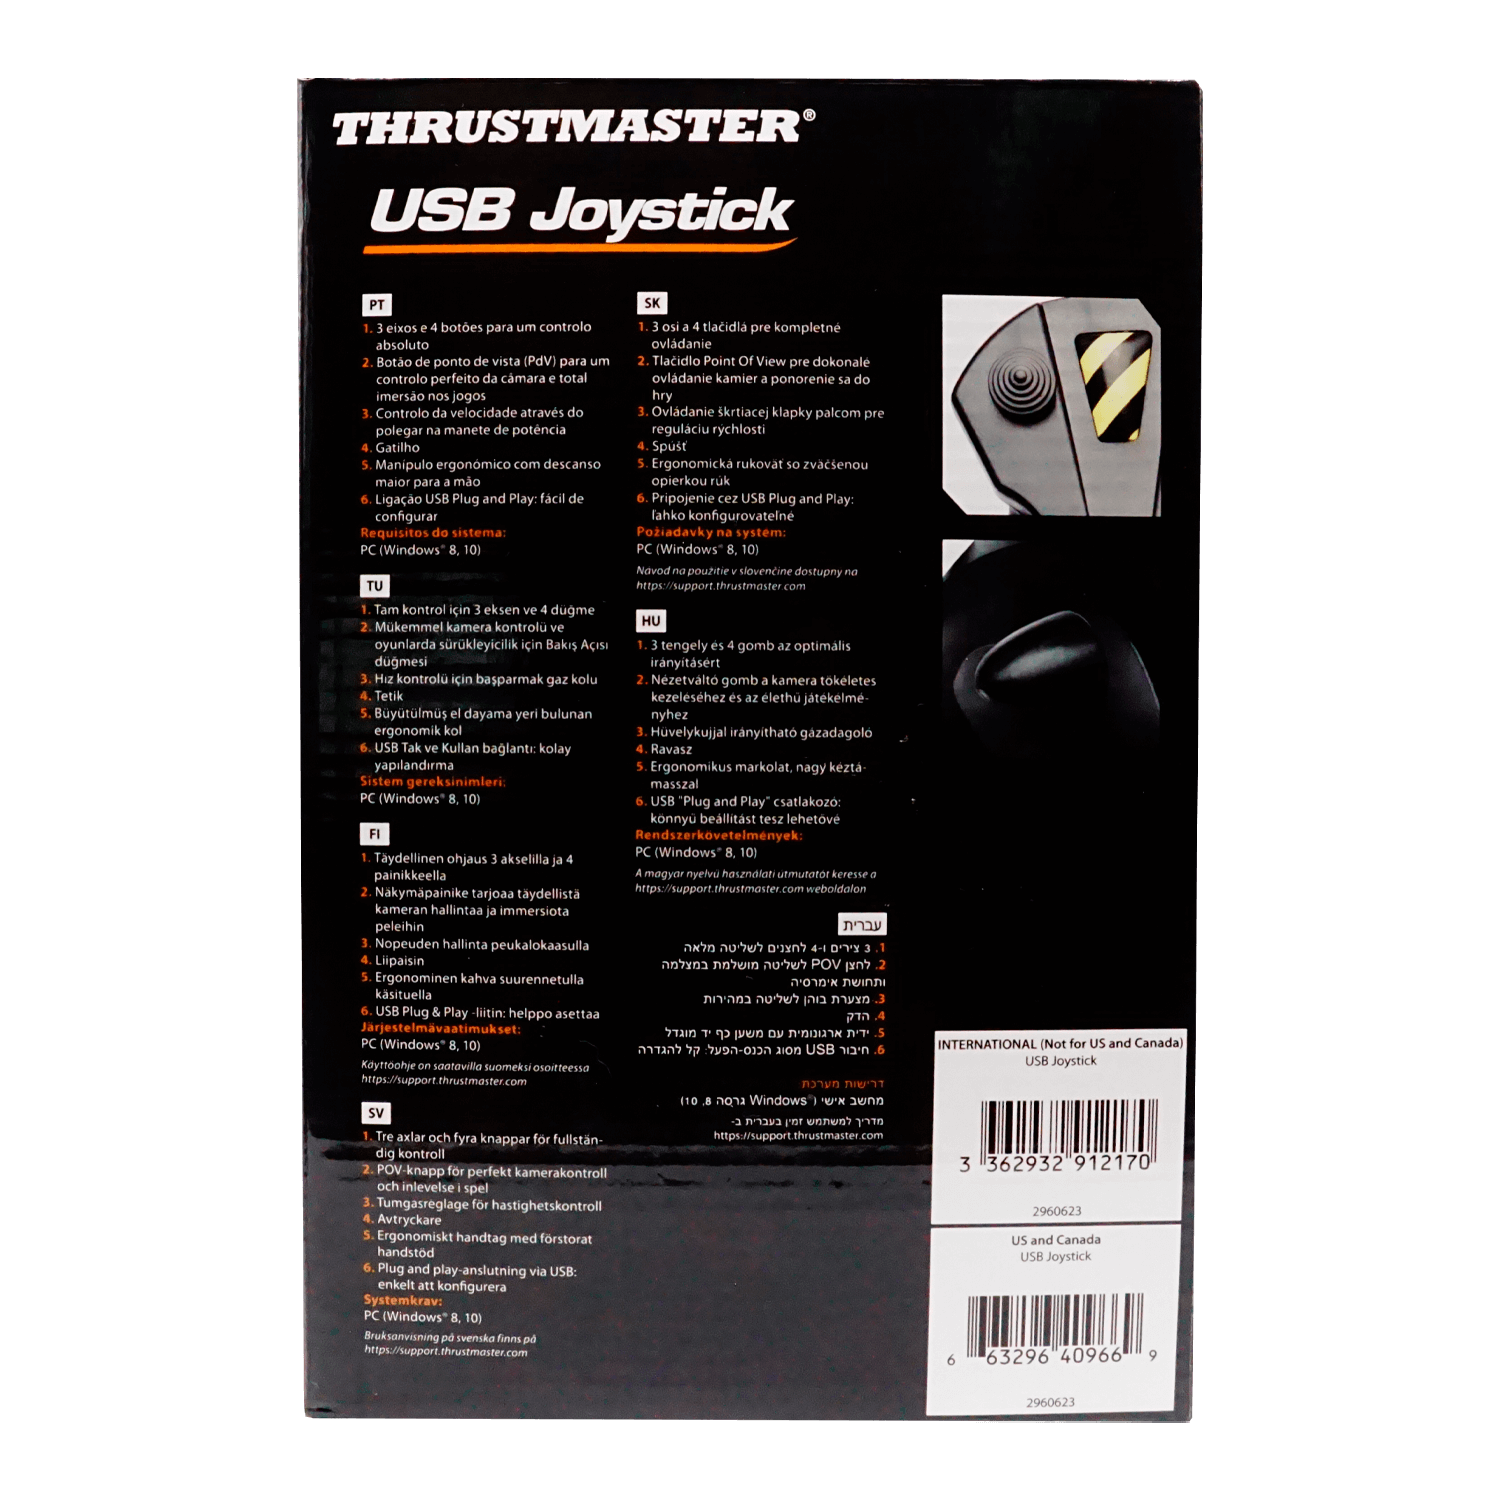 Thrustmaster USB Joystick for Windows